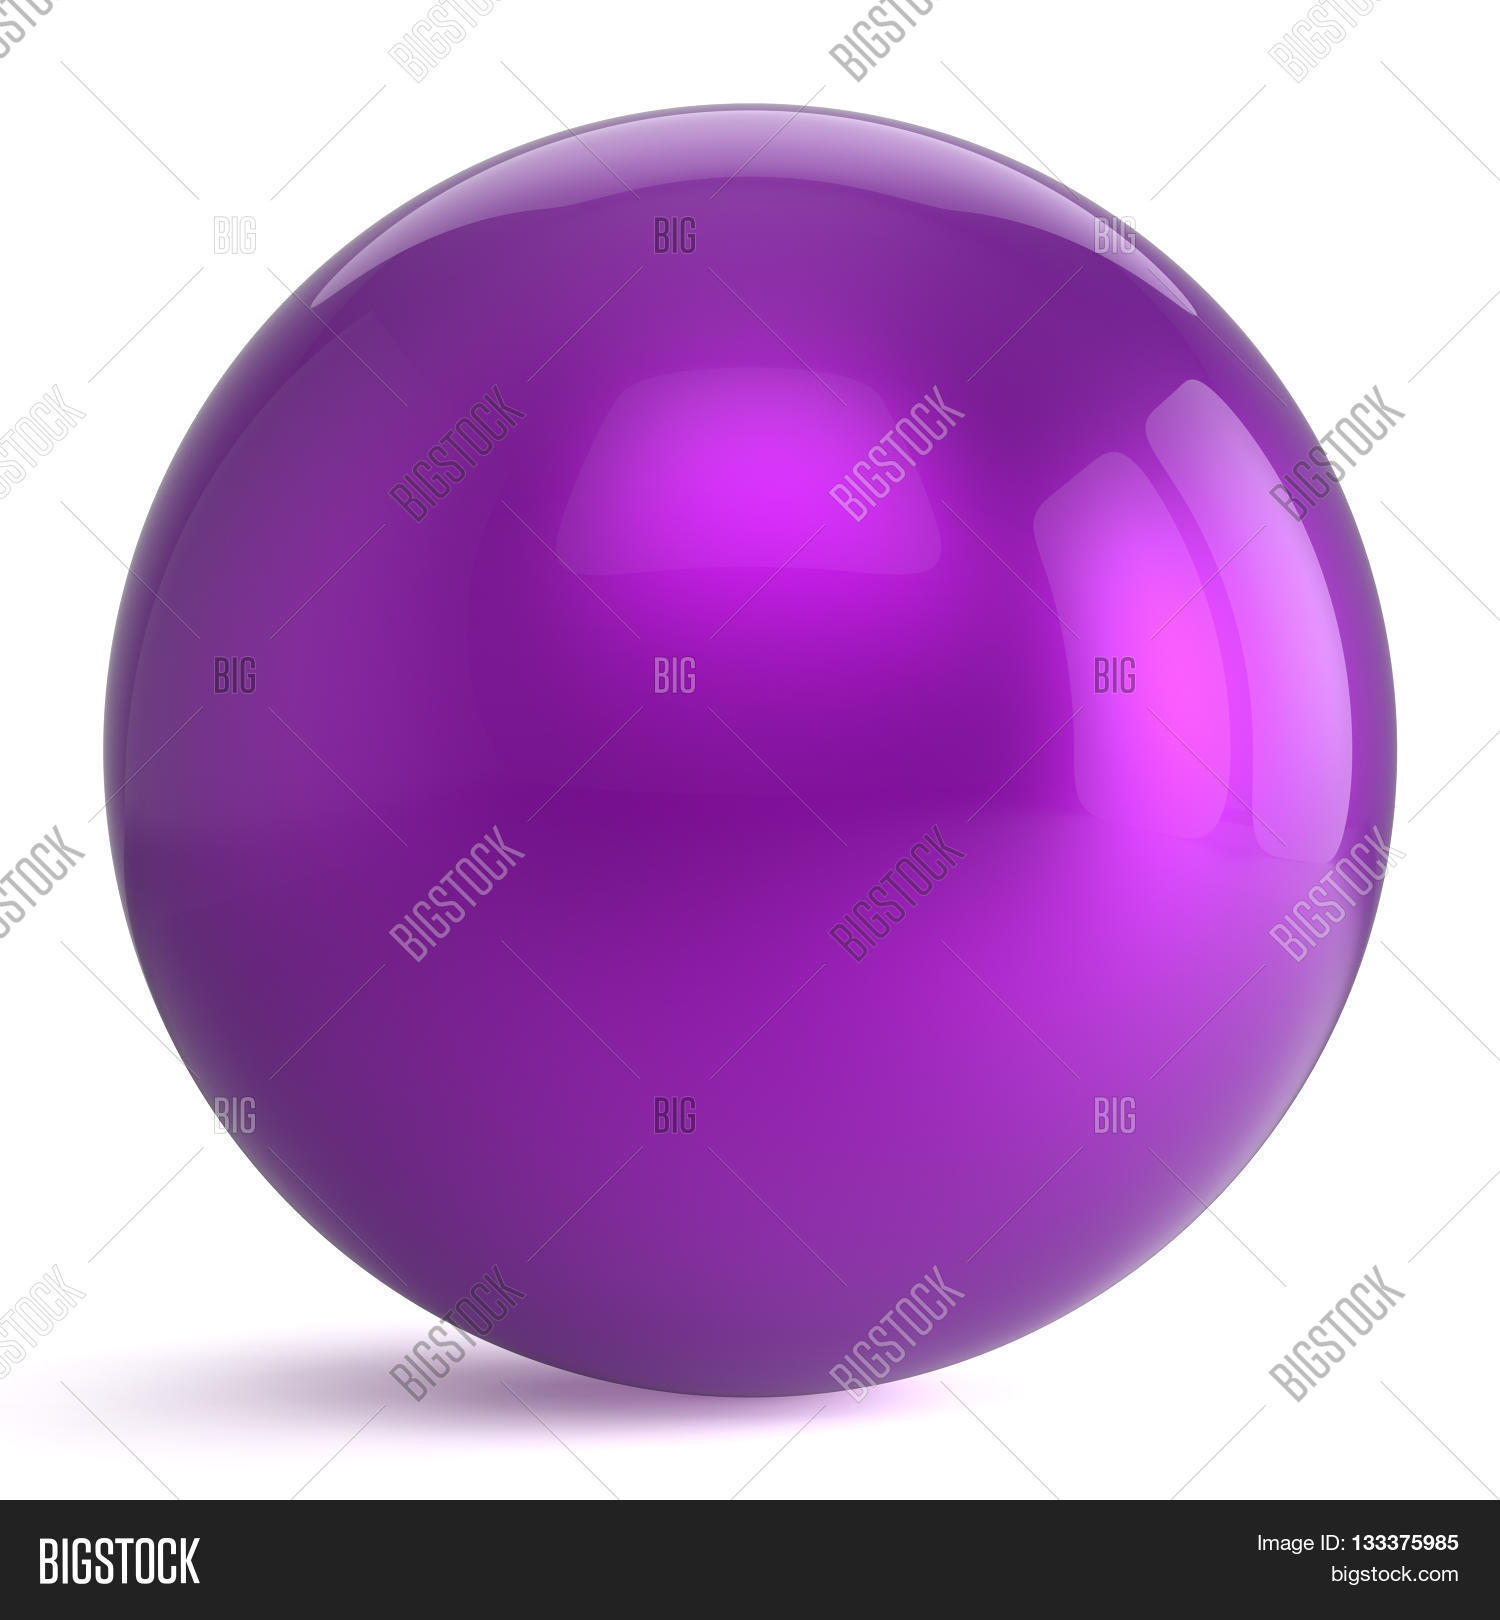 Sphere Round Button Purple Ball Image & Photo | Bigstock